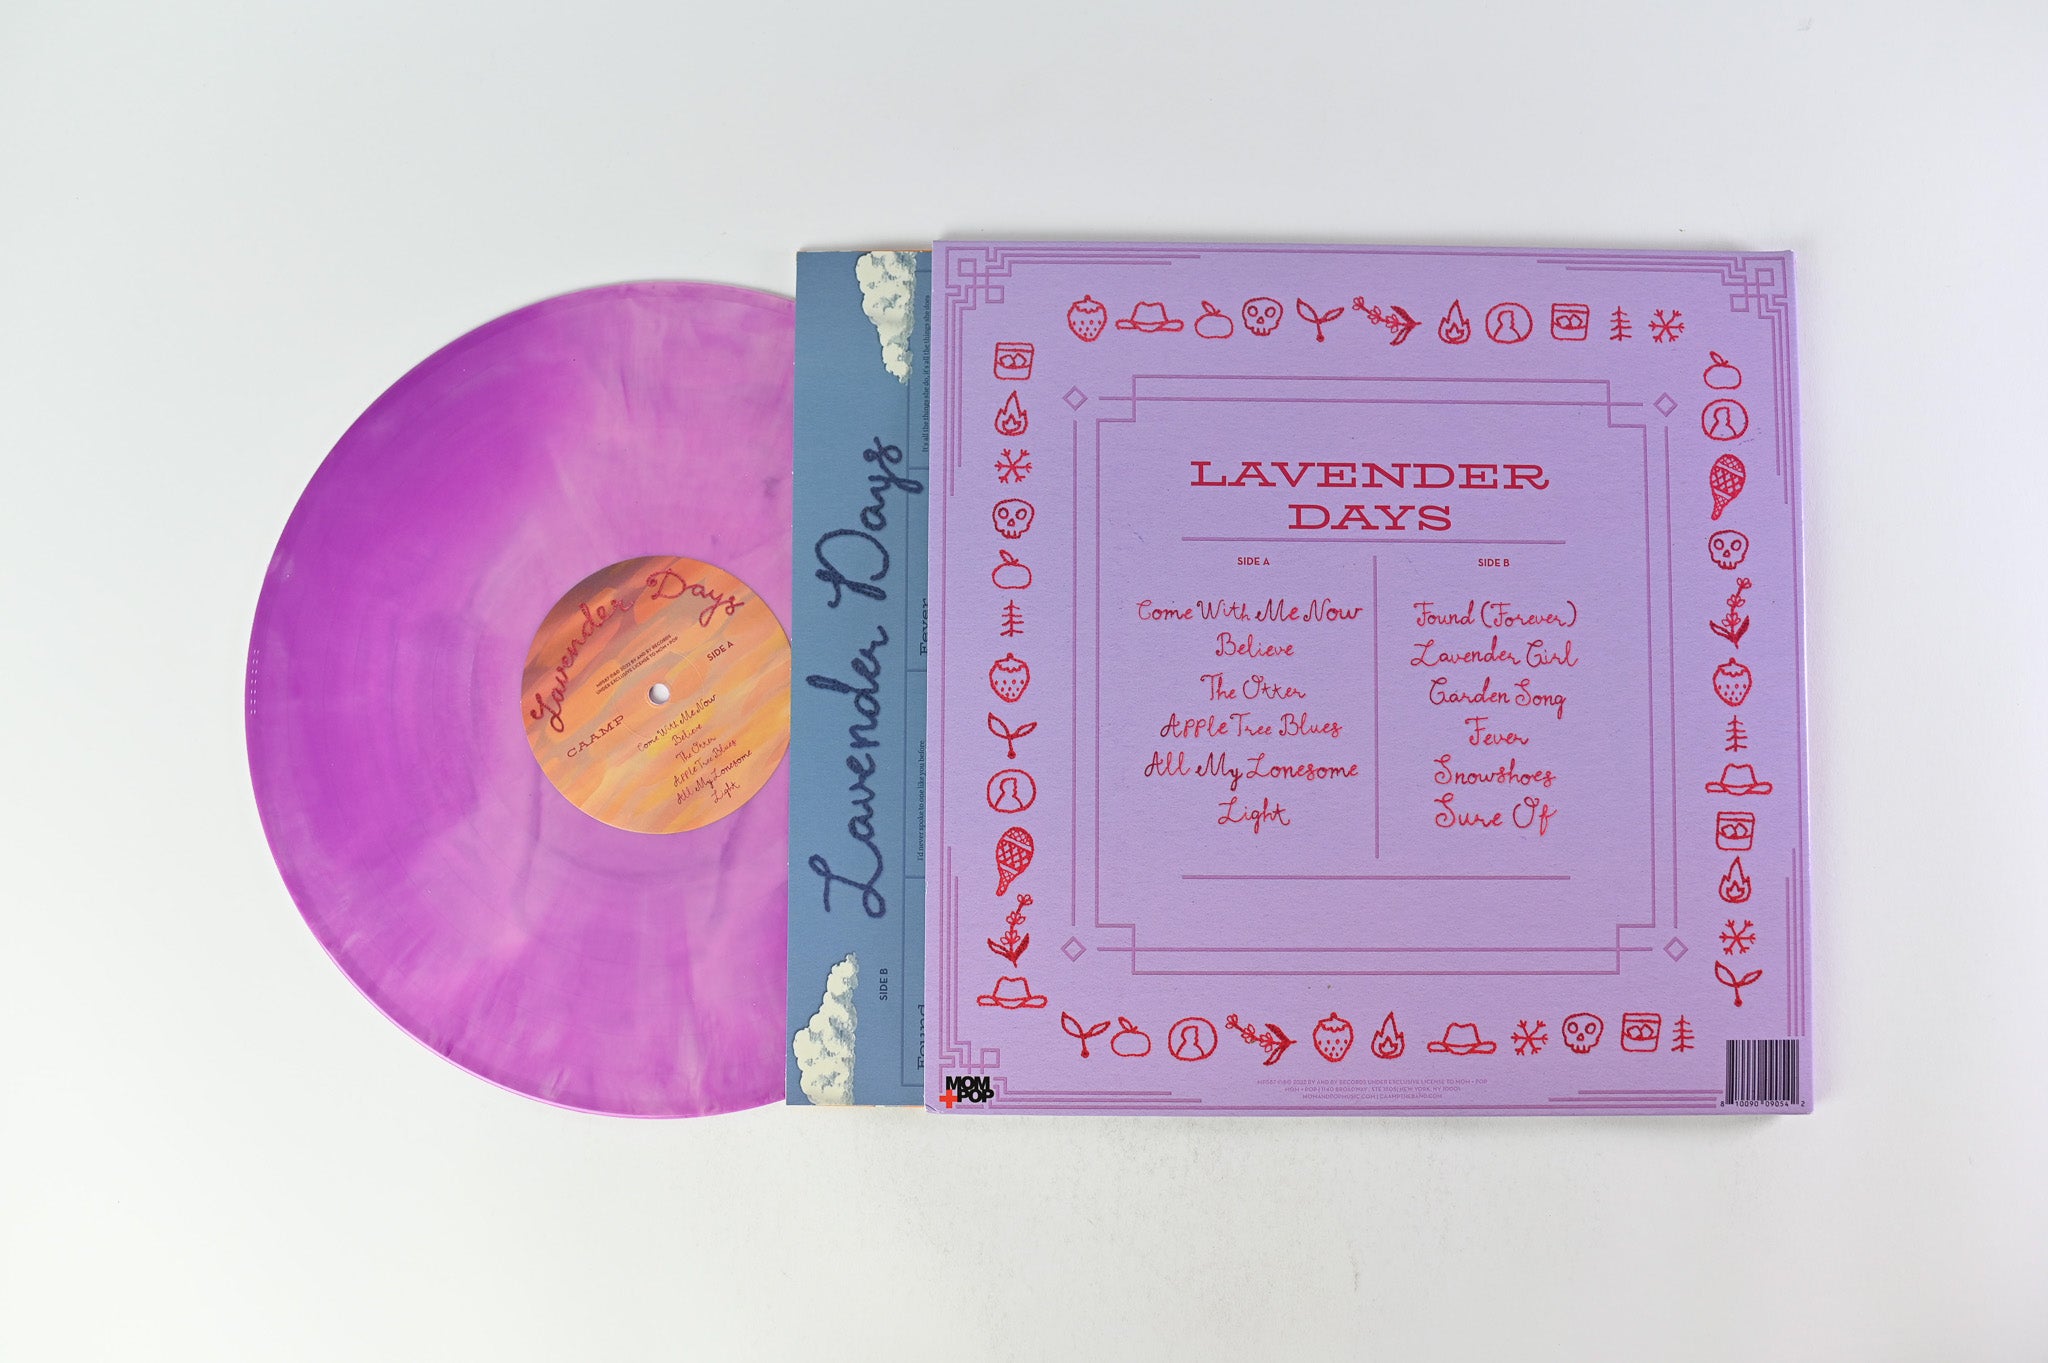 Caamp - Lavender Days on Mom + Pop - Pink and Purple Galaxy Swirl